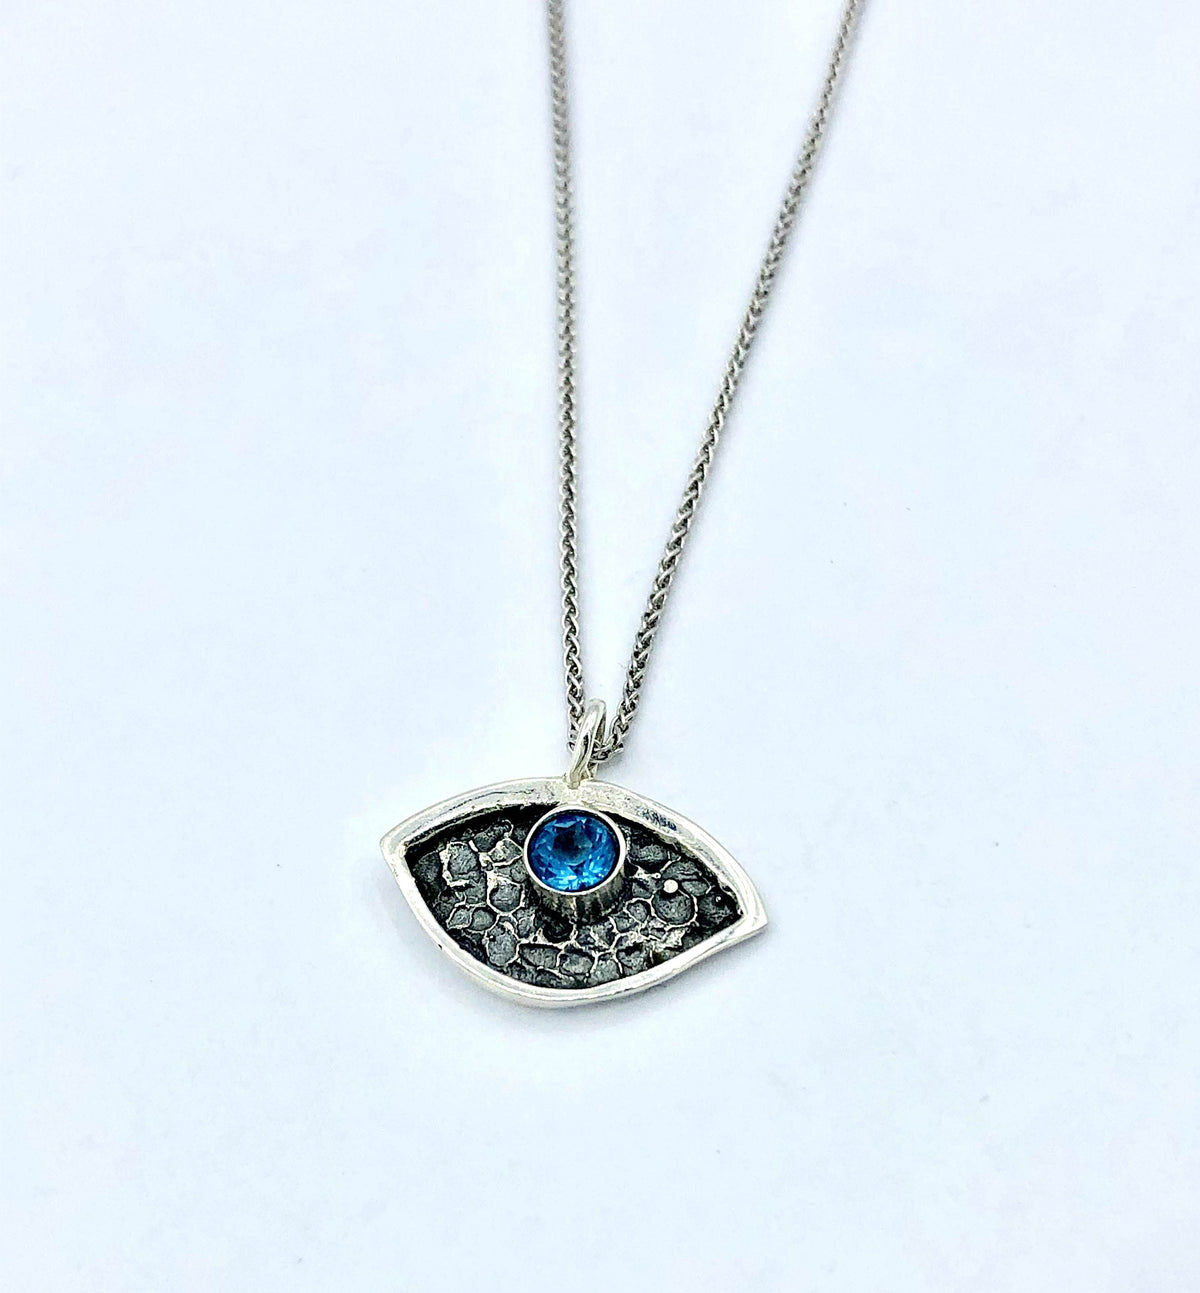 Evil eye pendant, blue topaz stone, small evil eye pendant silver chain 